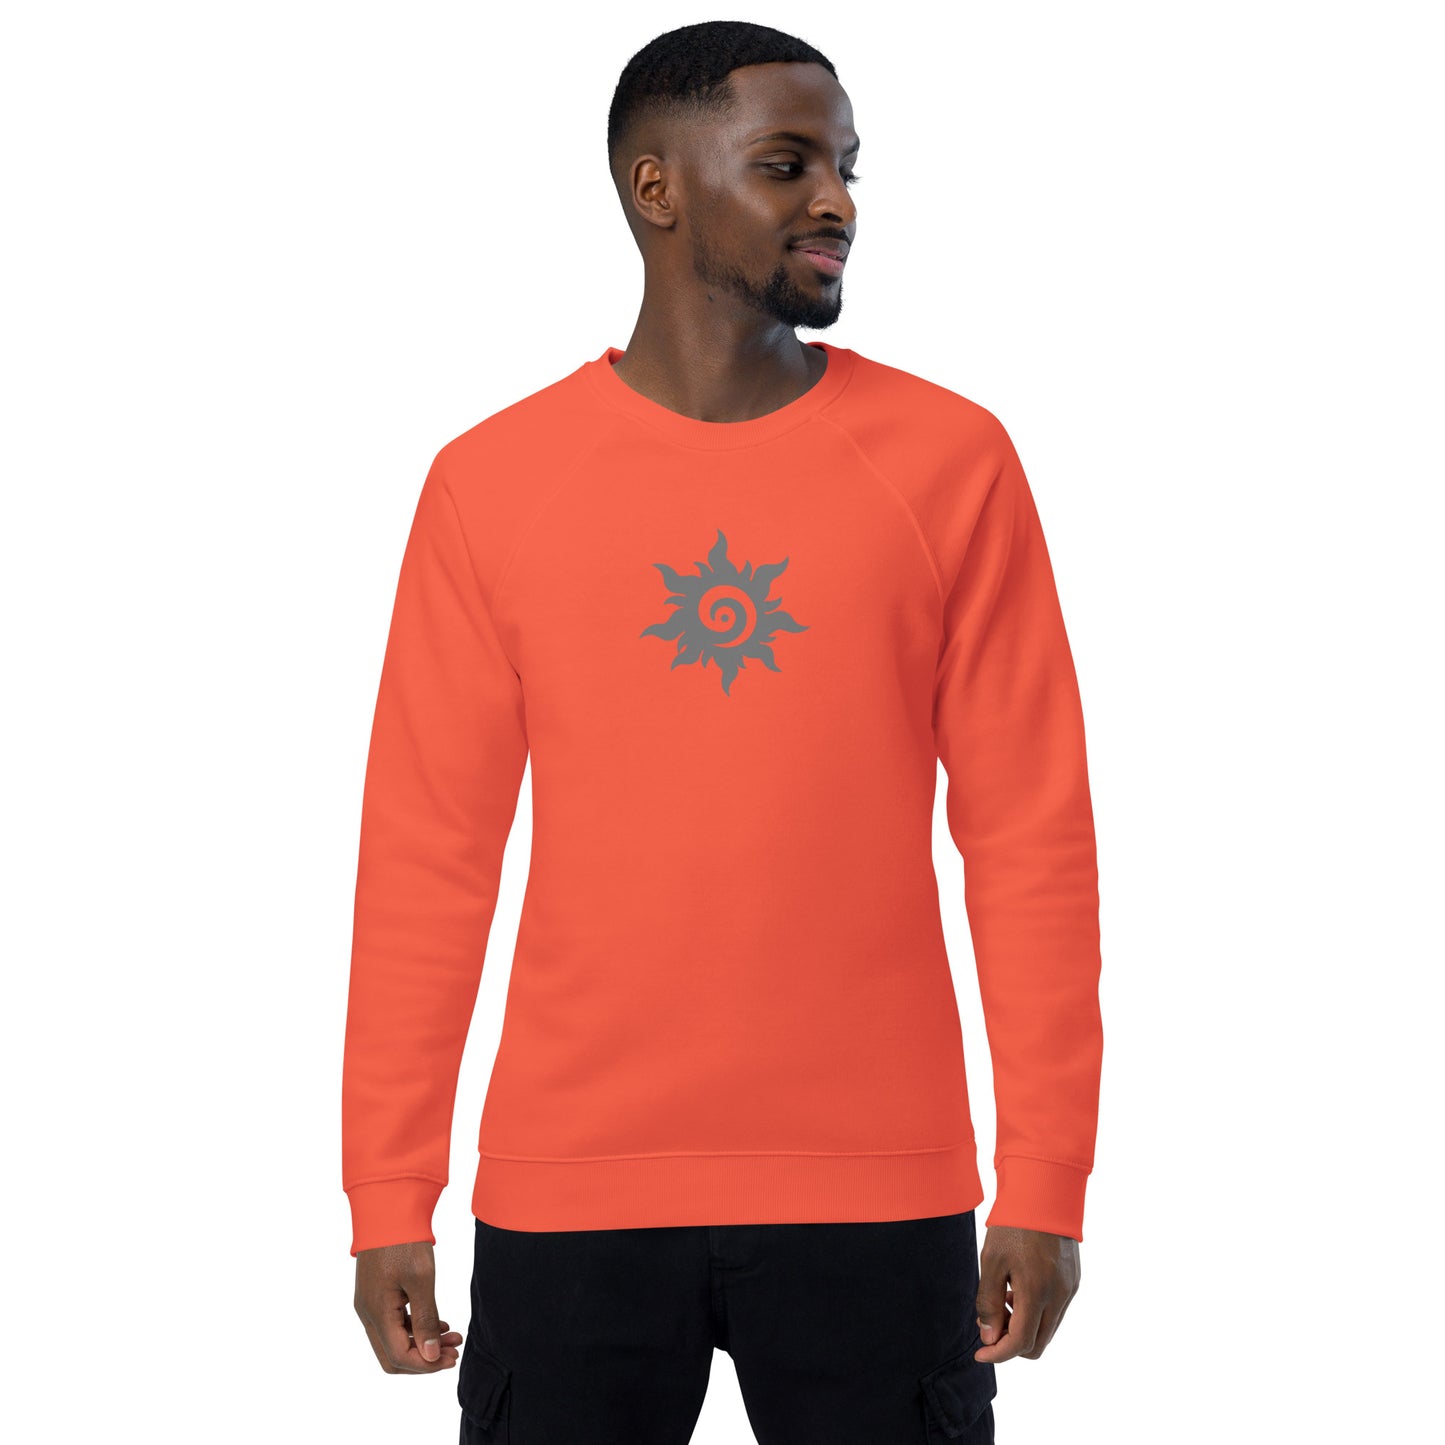 Unisex Organic Sweatshirt  ActSun-Gray1